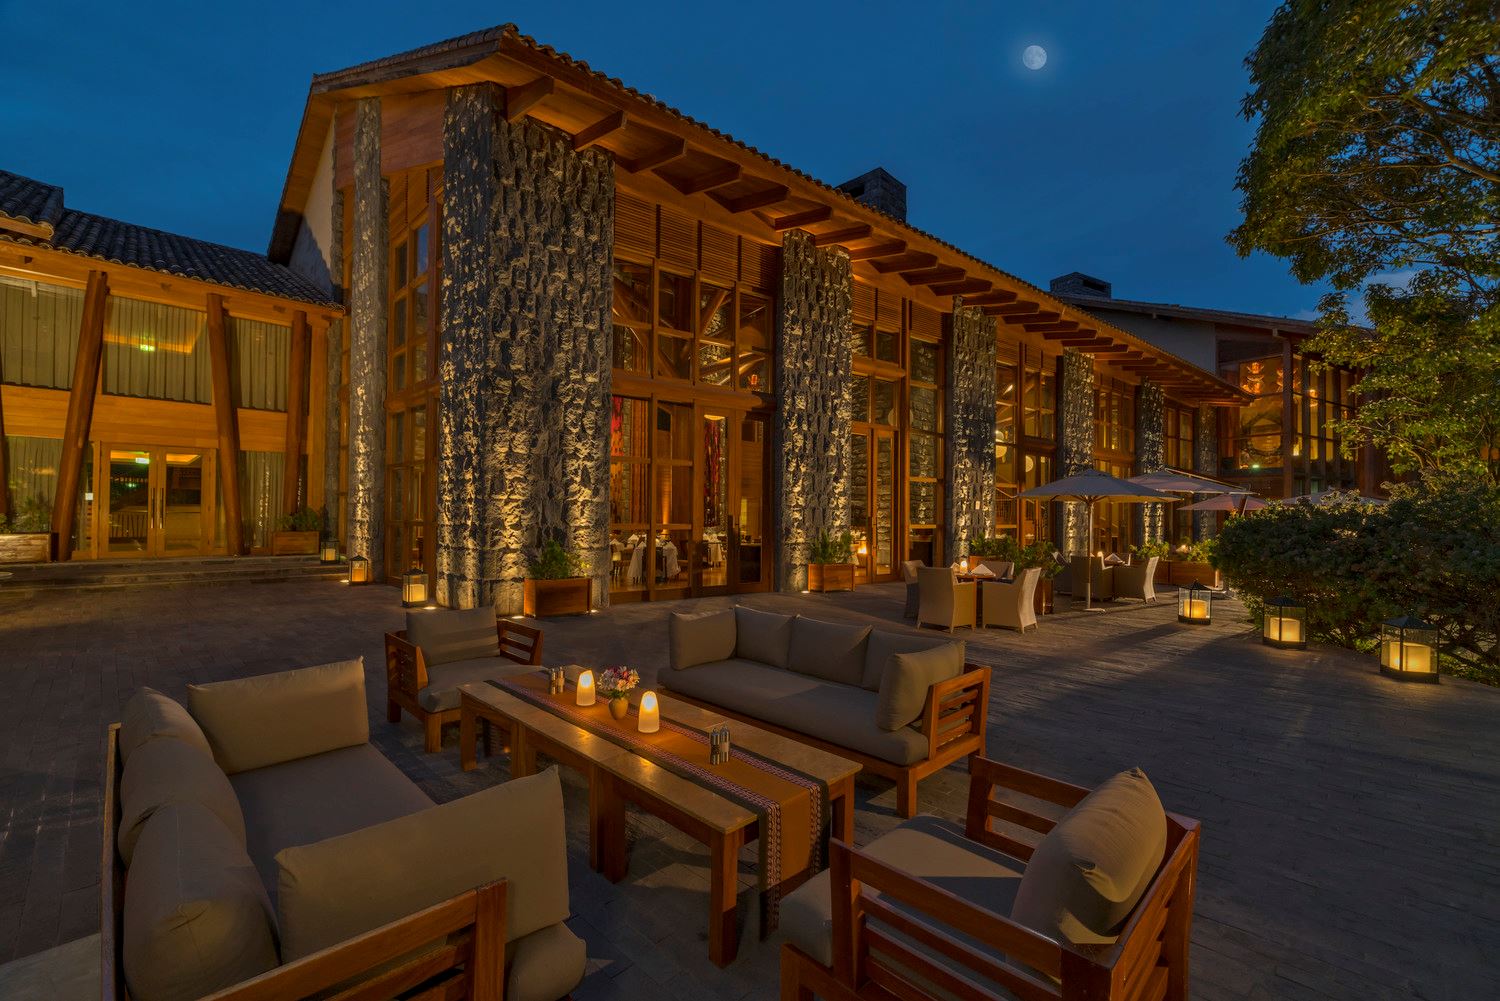 Tambo del Inka, a Luxury Collection Resort & Spa